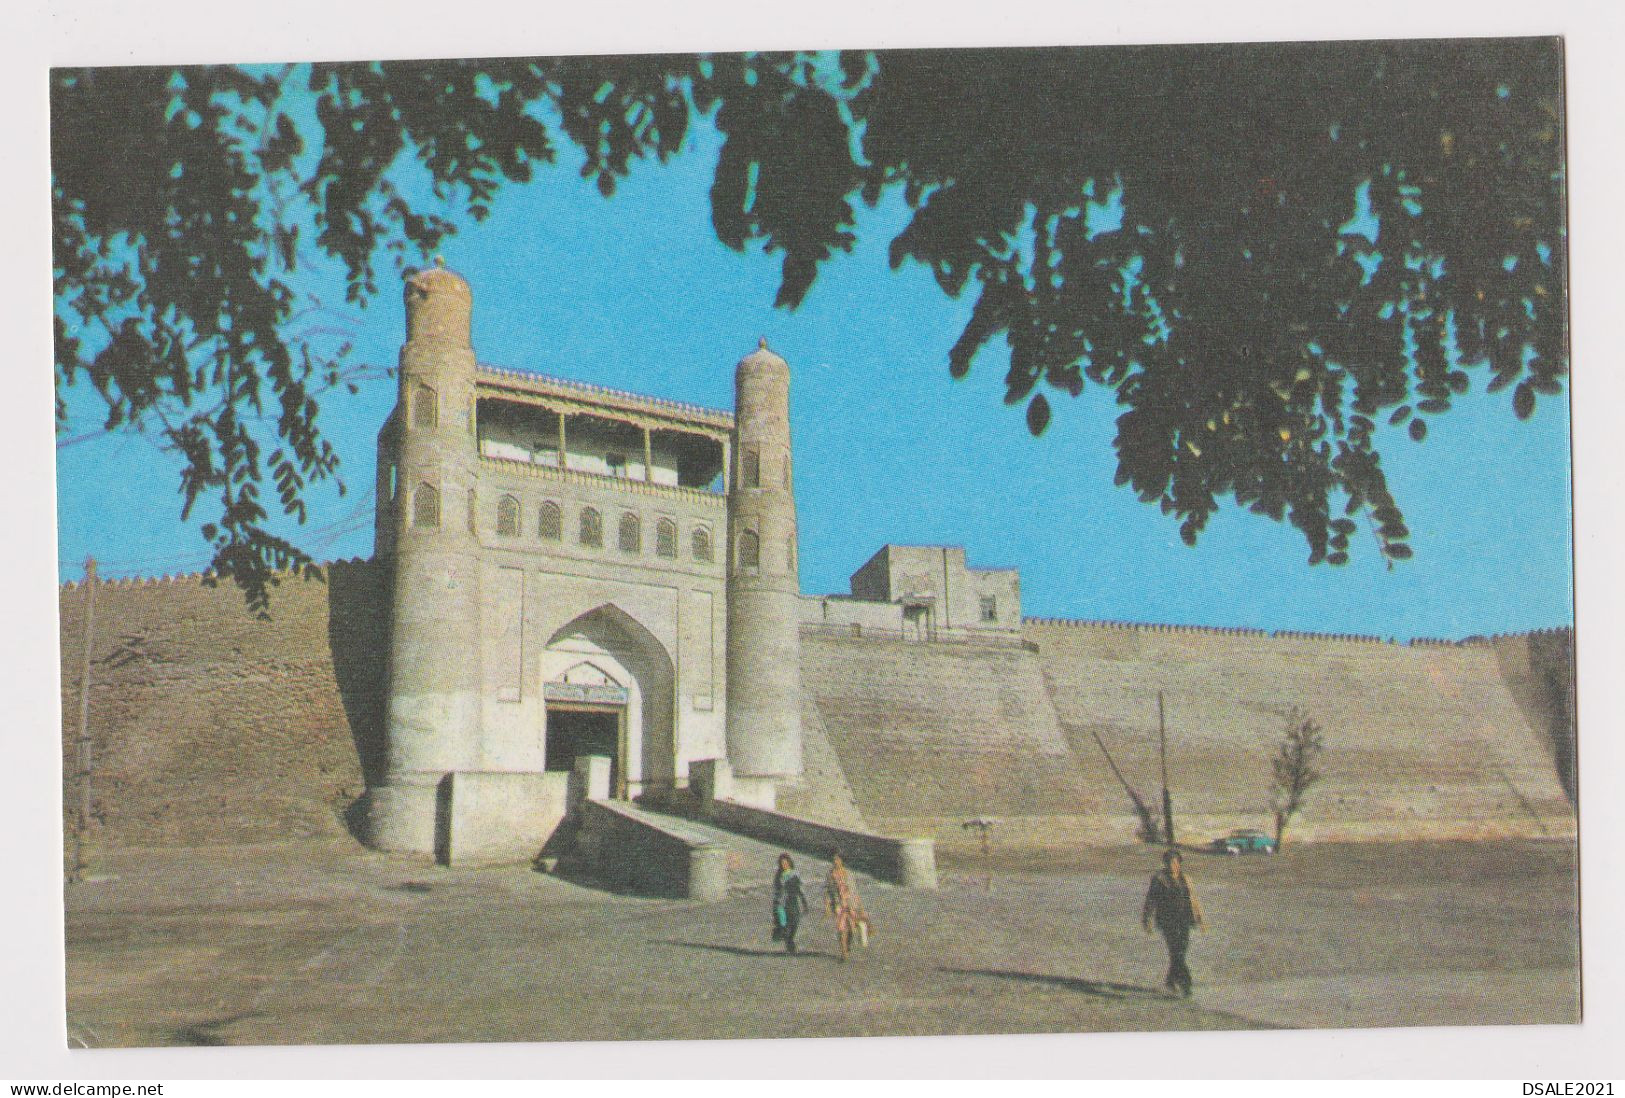 Uzbekistan Bukhara The Ark Entrance Gates View, Vintage 1970s Soviet Russia USSR Photo Postcard RPPc AK (42450) - Uzbekistán